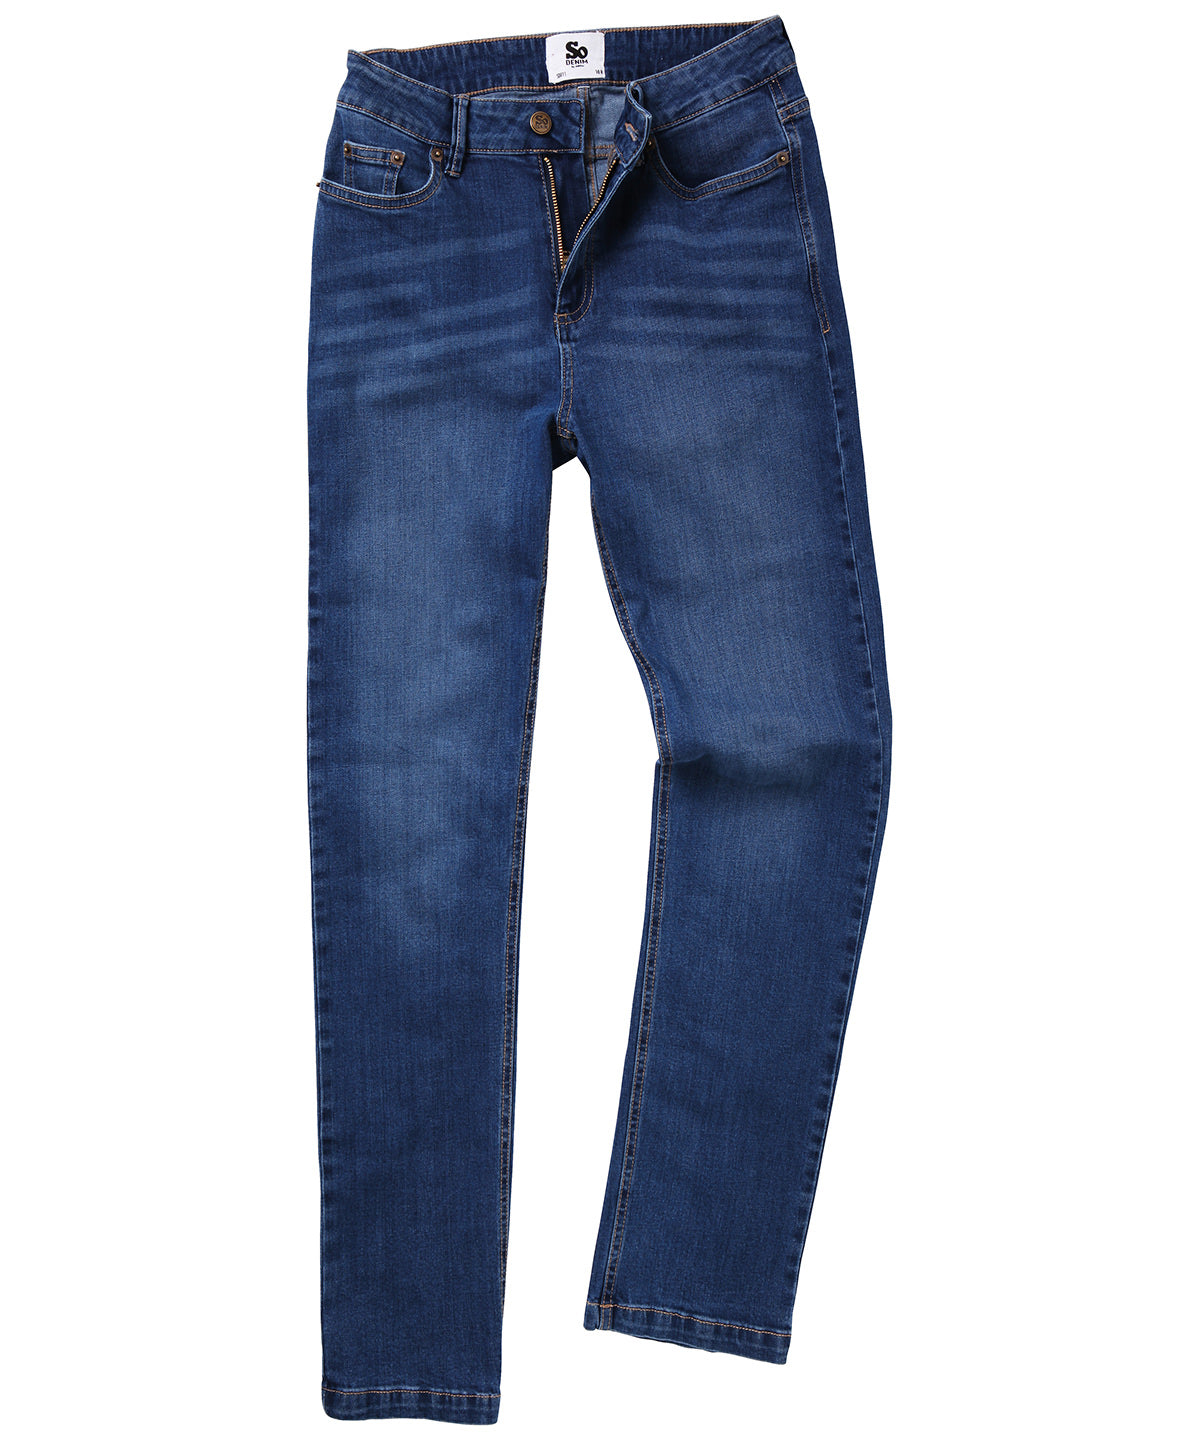 Personalised Trousers - Black AWDis So Denim Women's Katy straight jeans